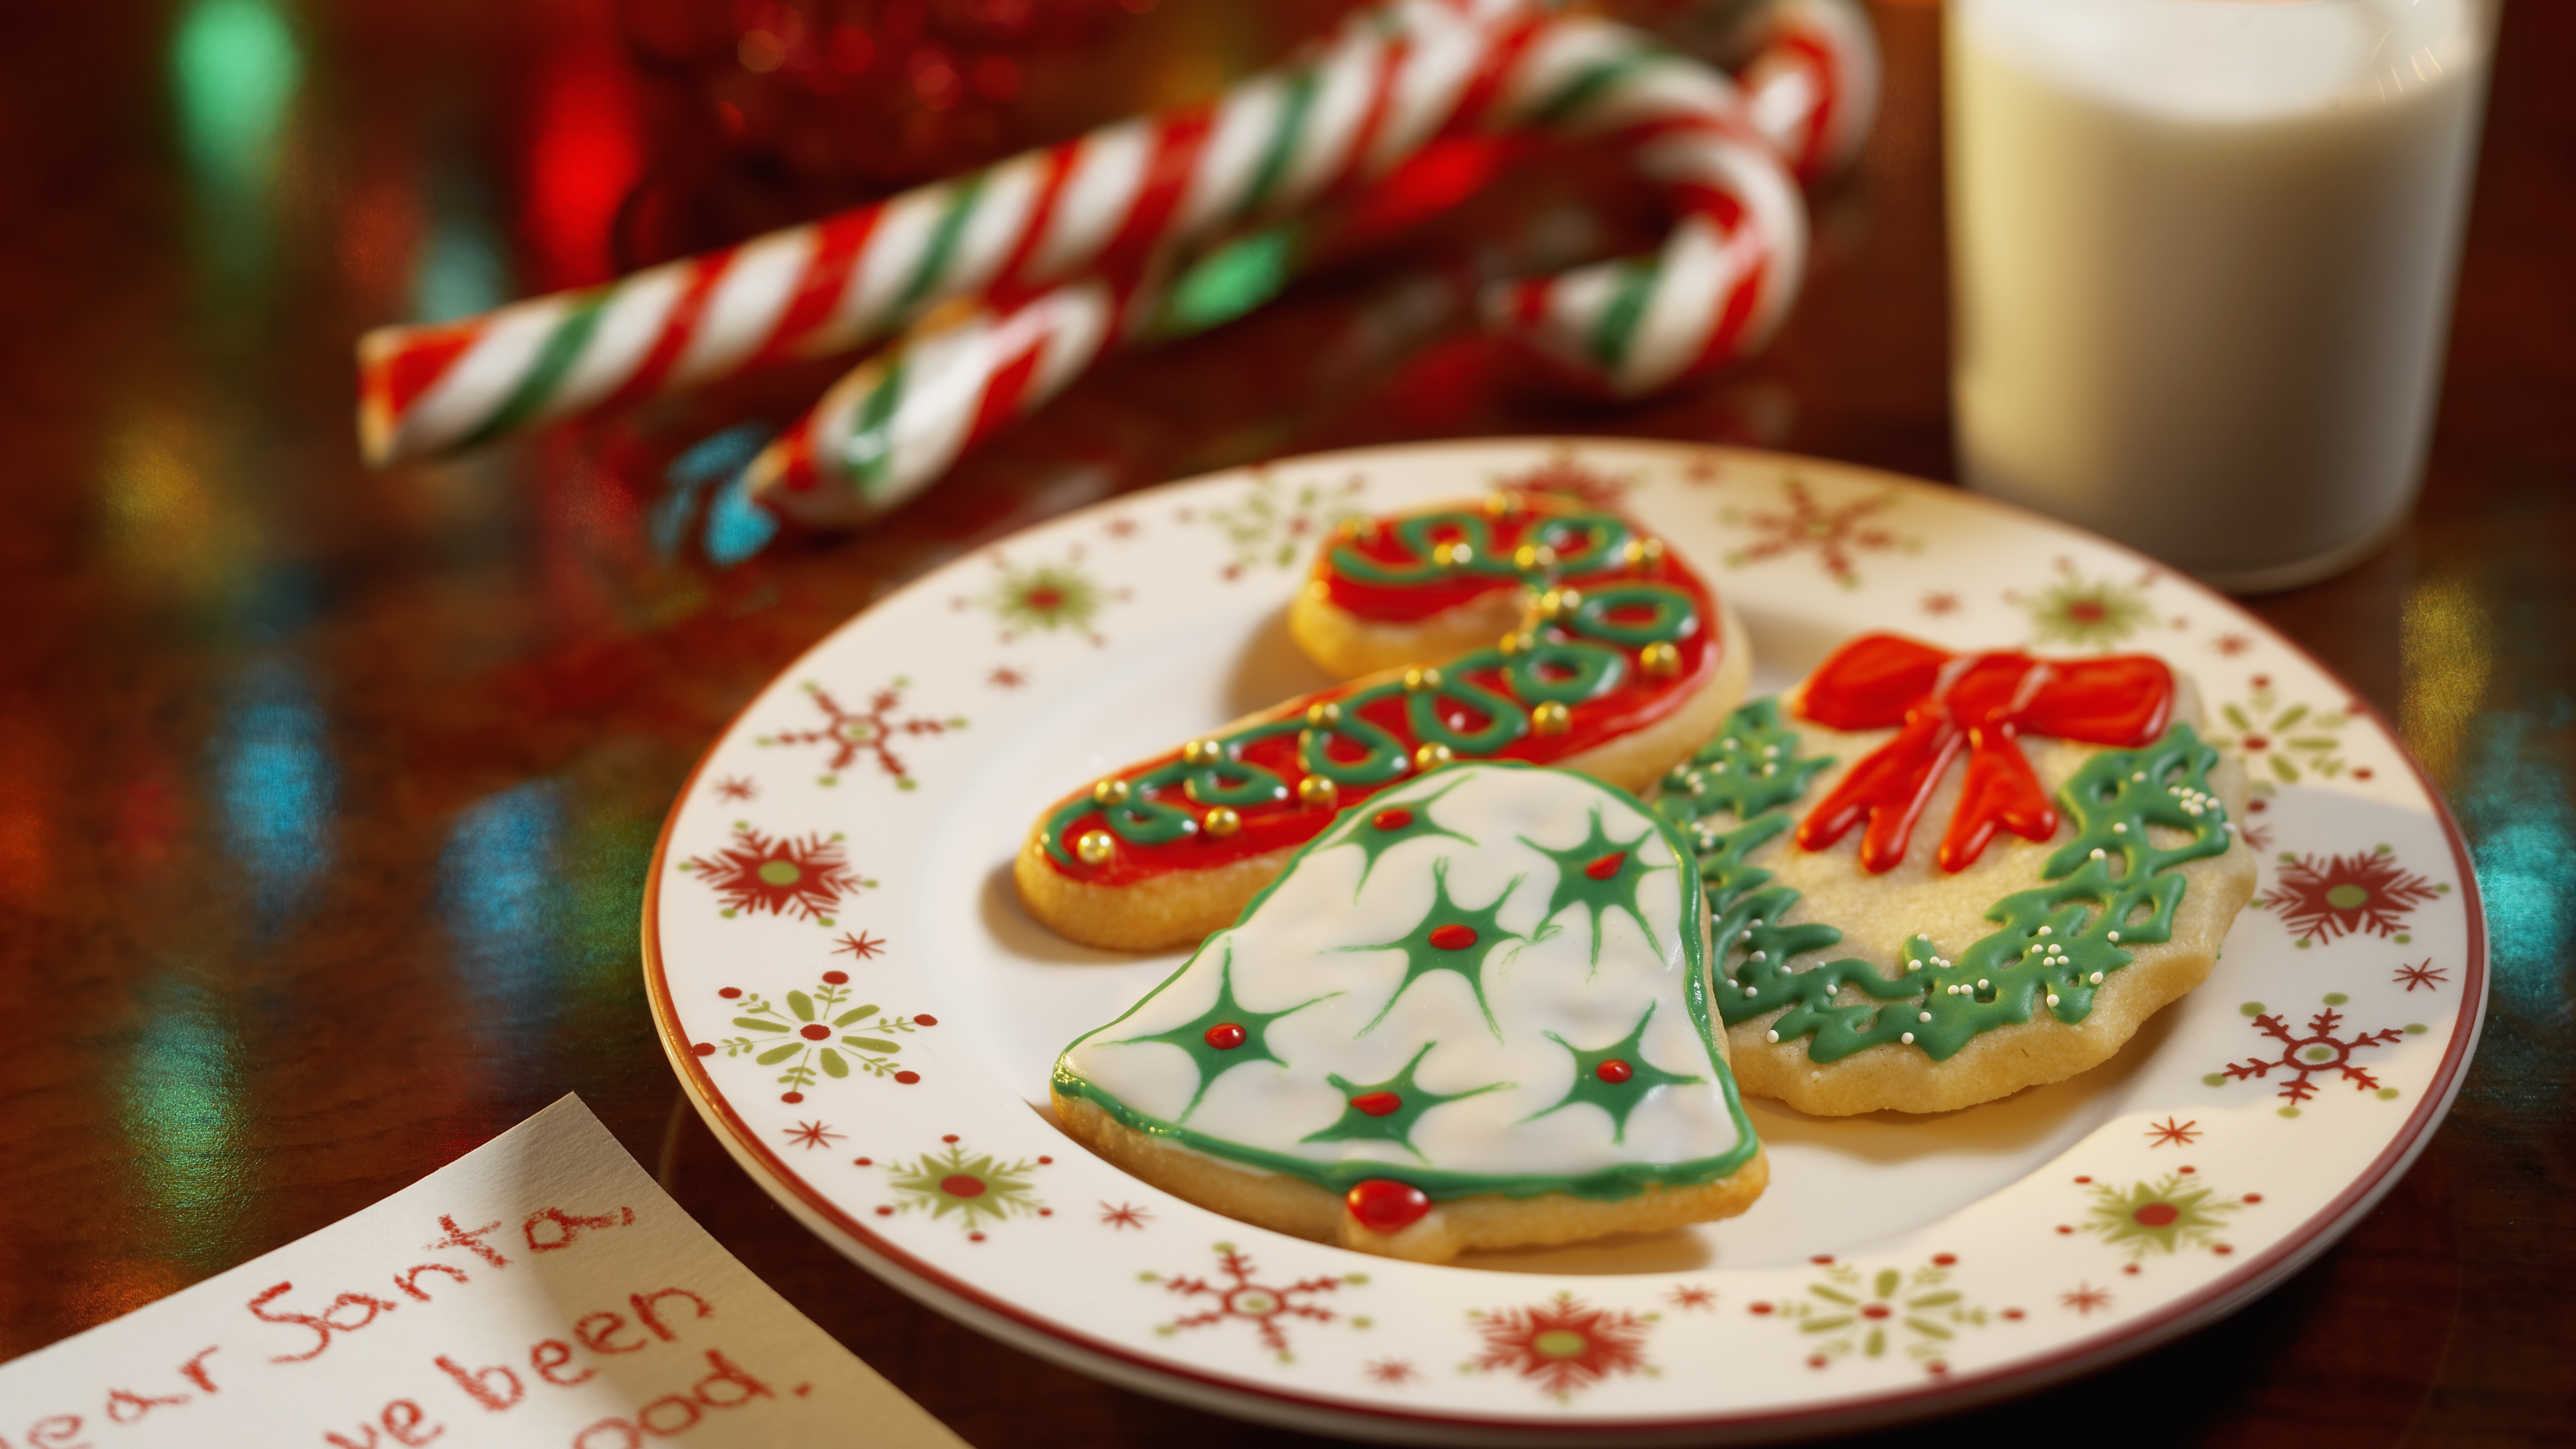 santa’s cookies and milk